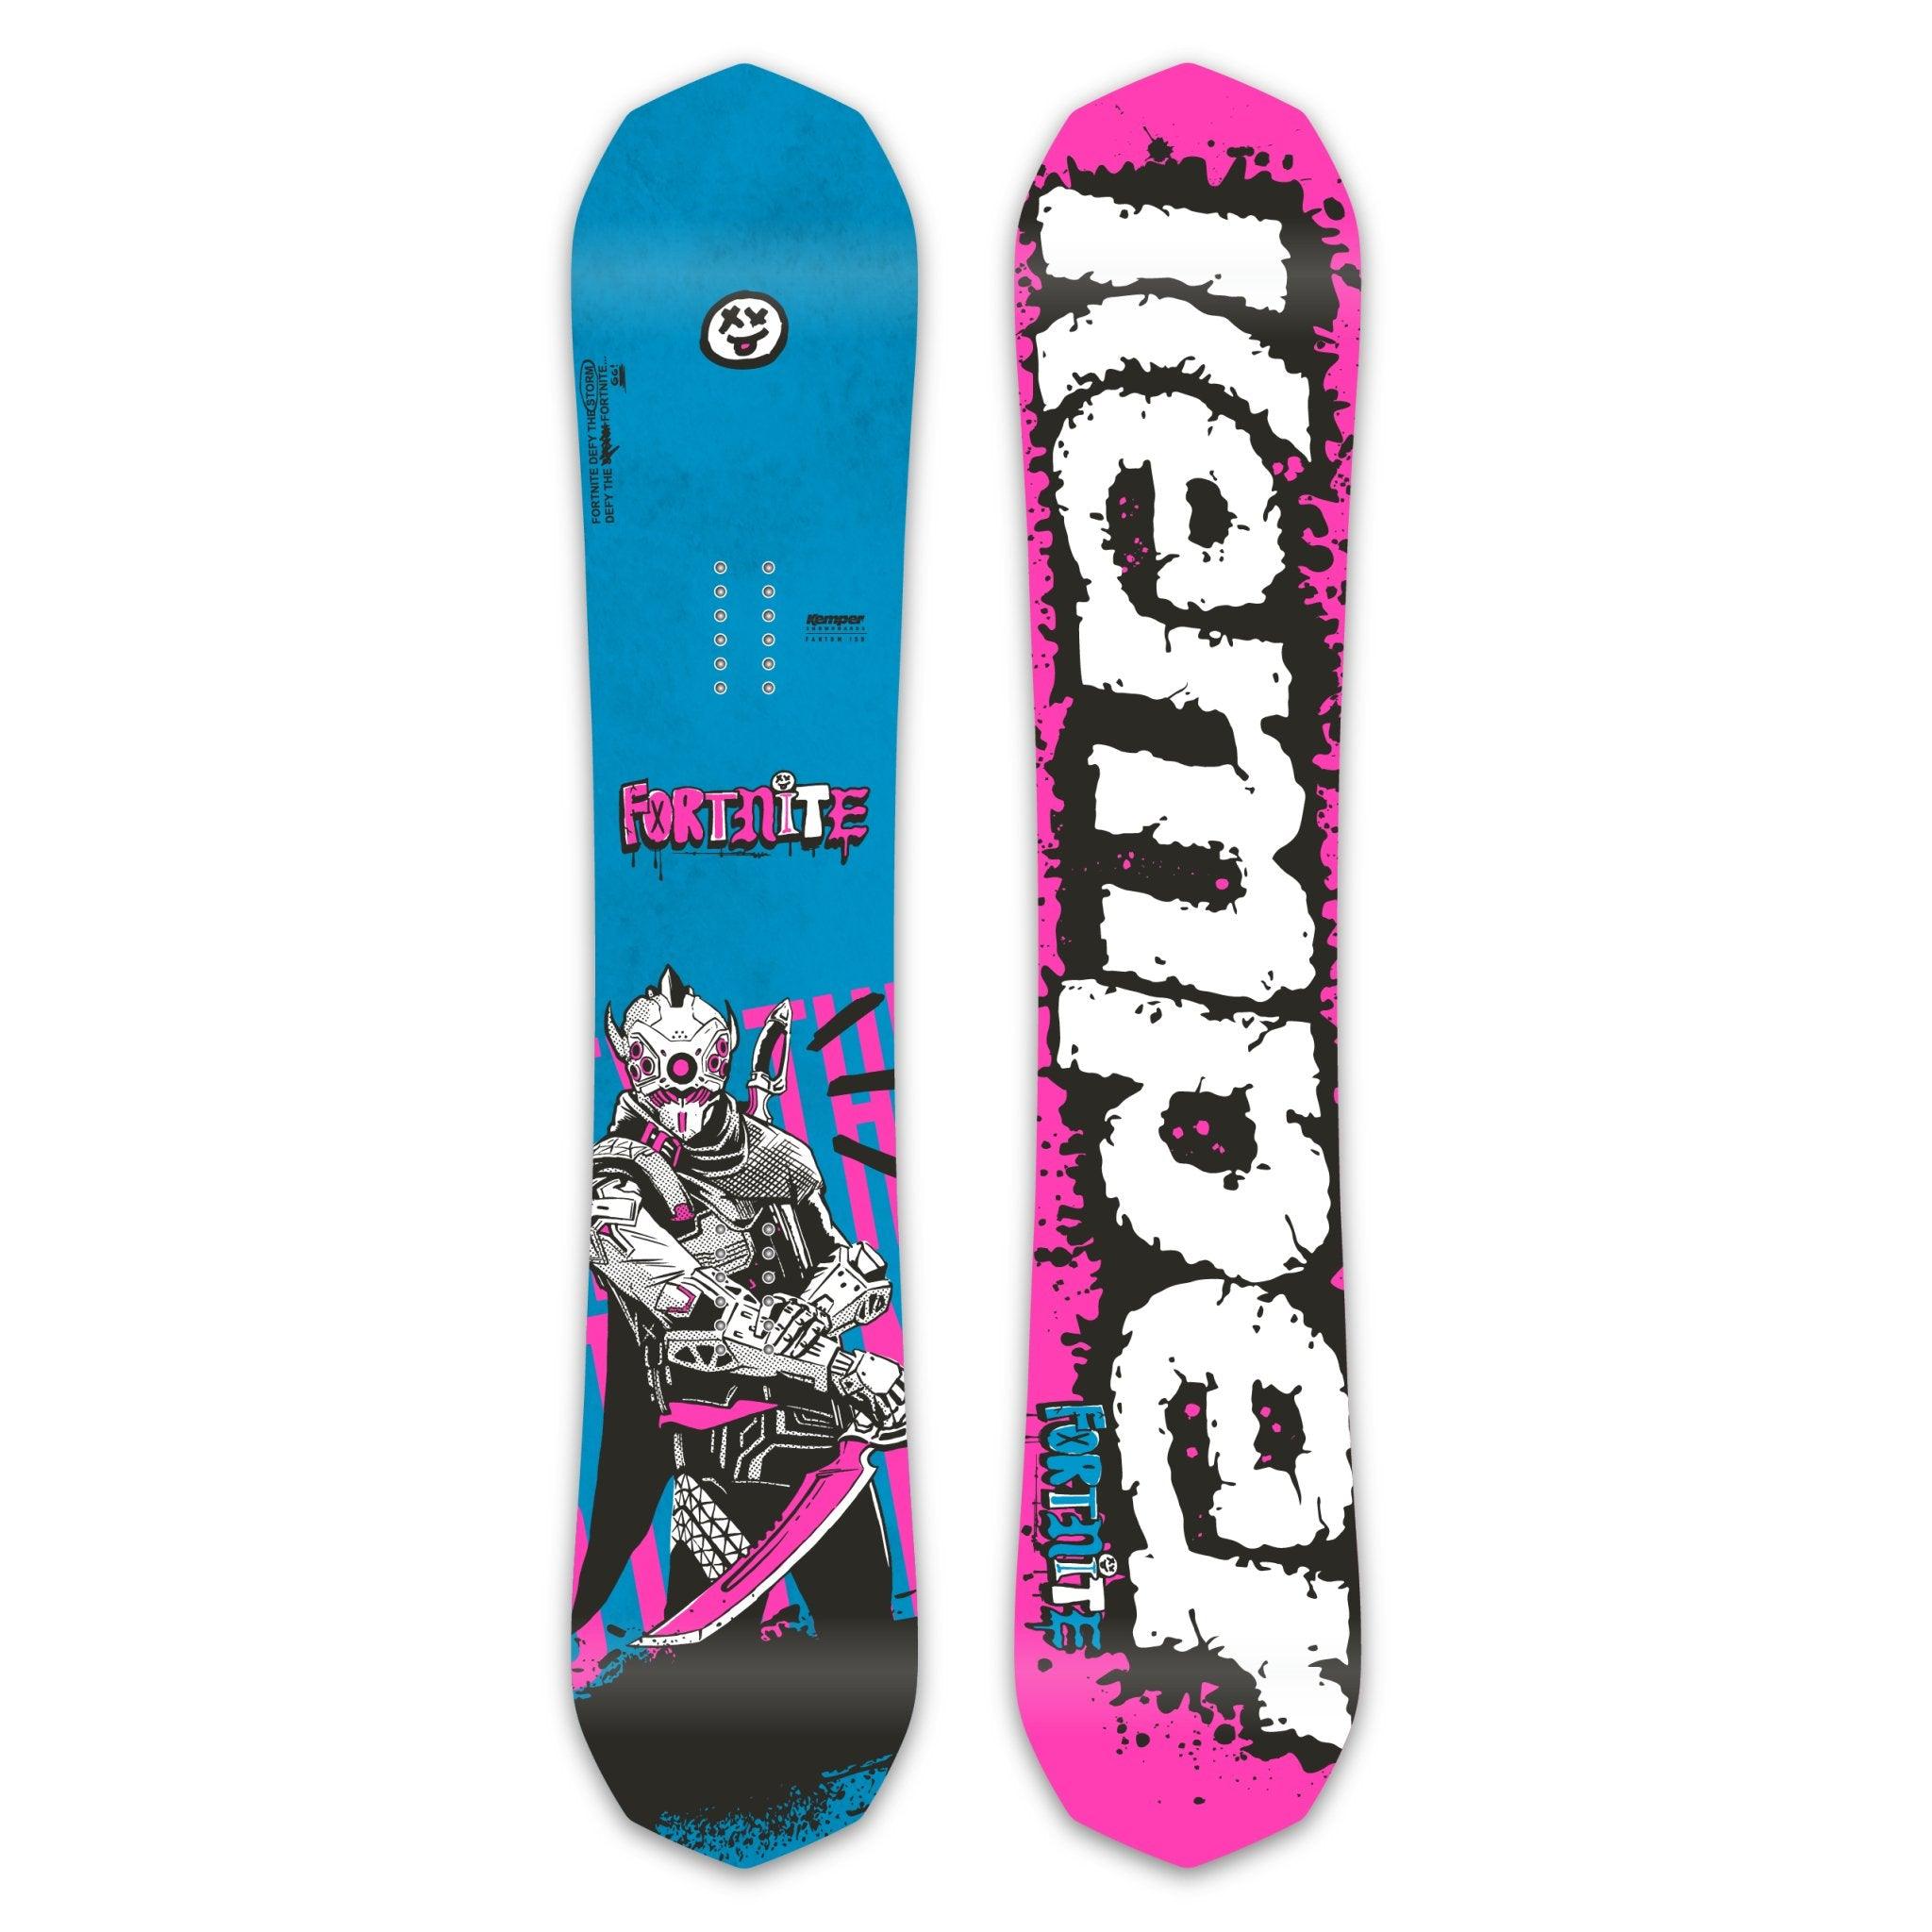 Kemper Fantom x Fortnite Snowboard | All-Mountain